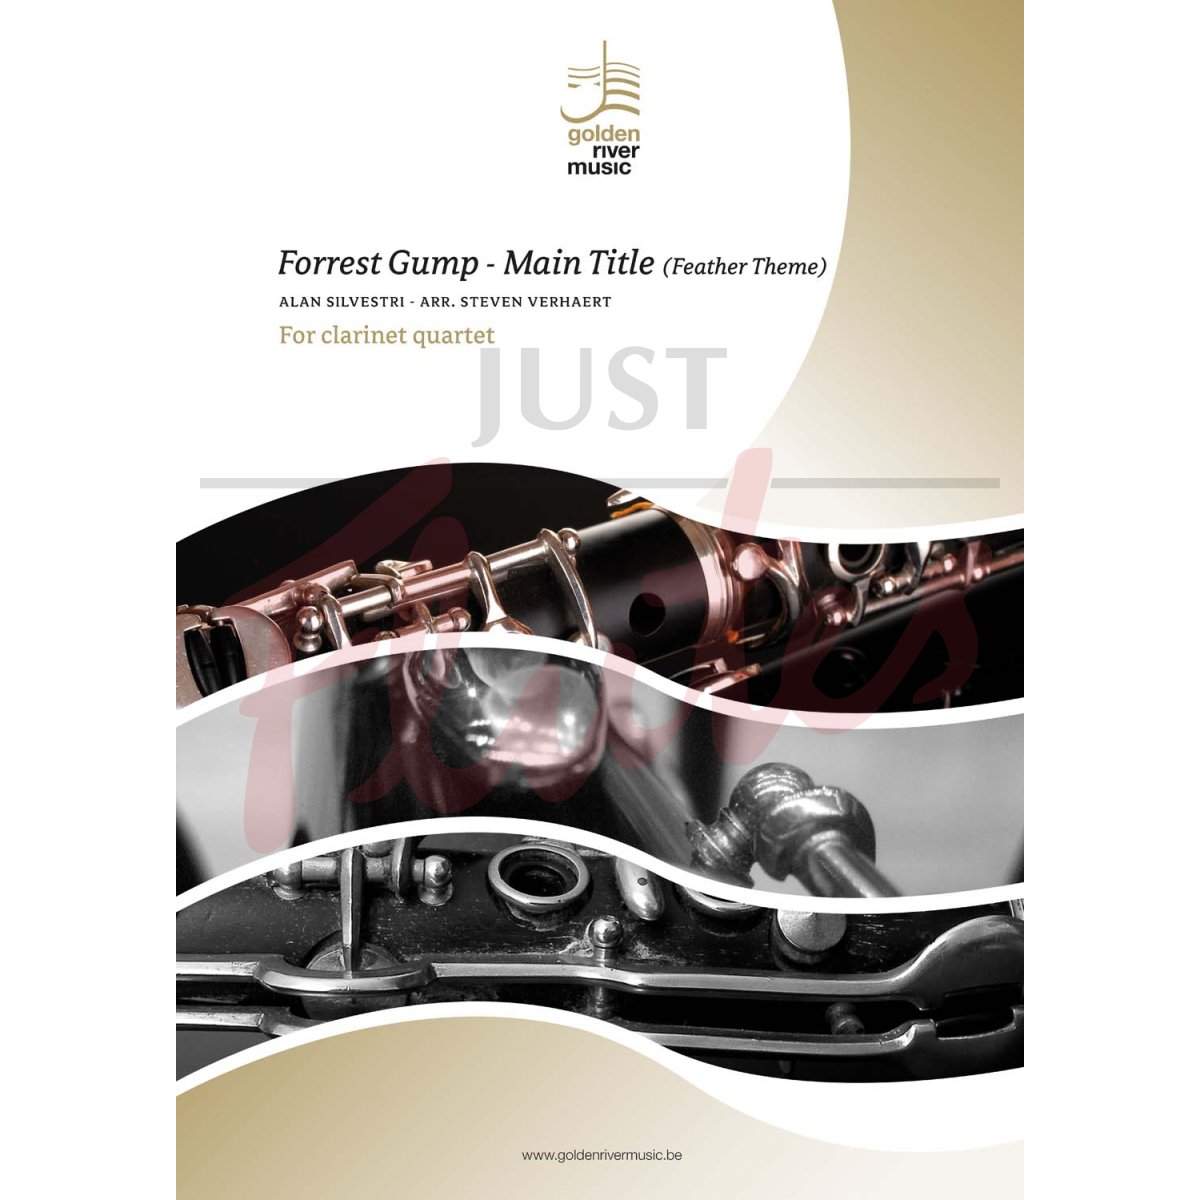 Forrest Gump Main Title (Feather Theme) for Clarinet Quartet